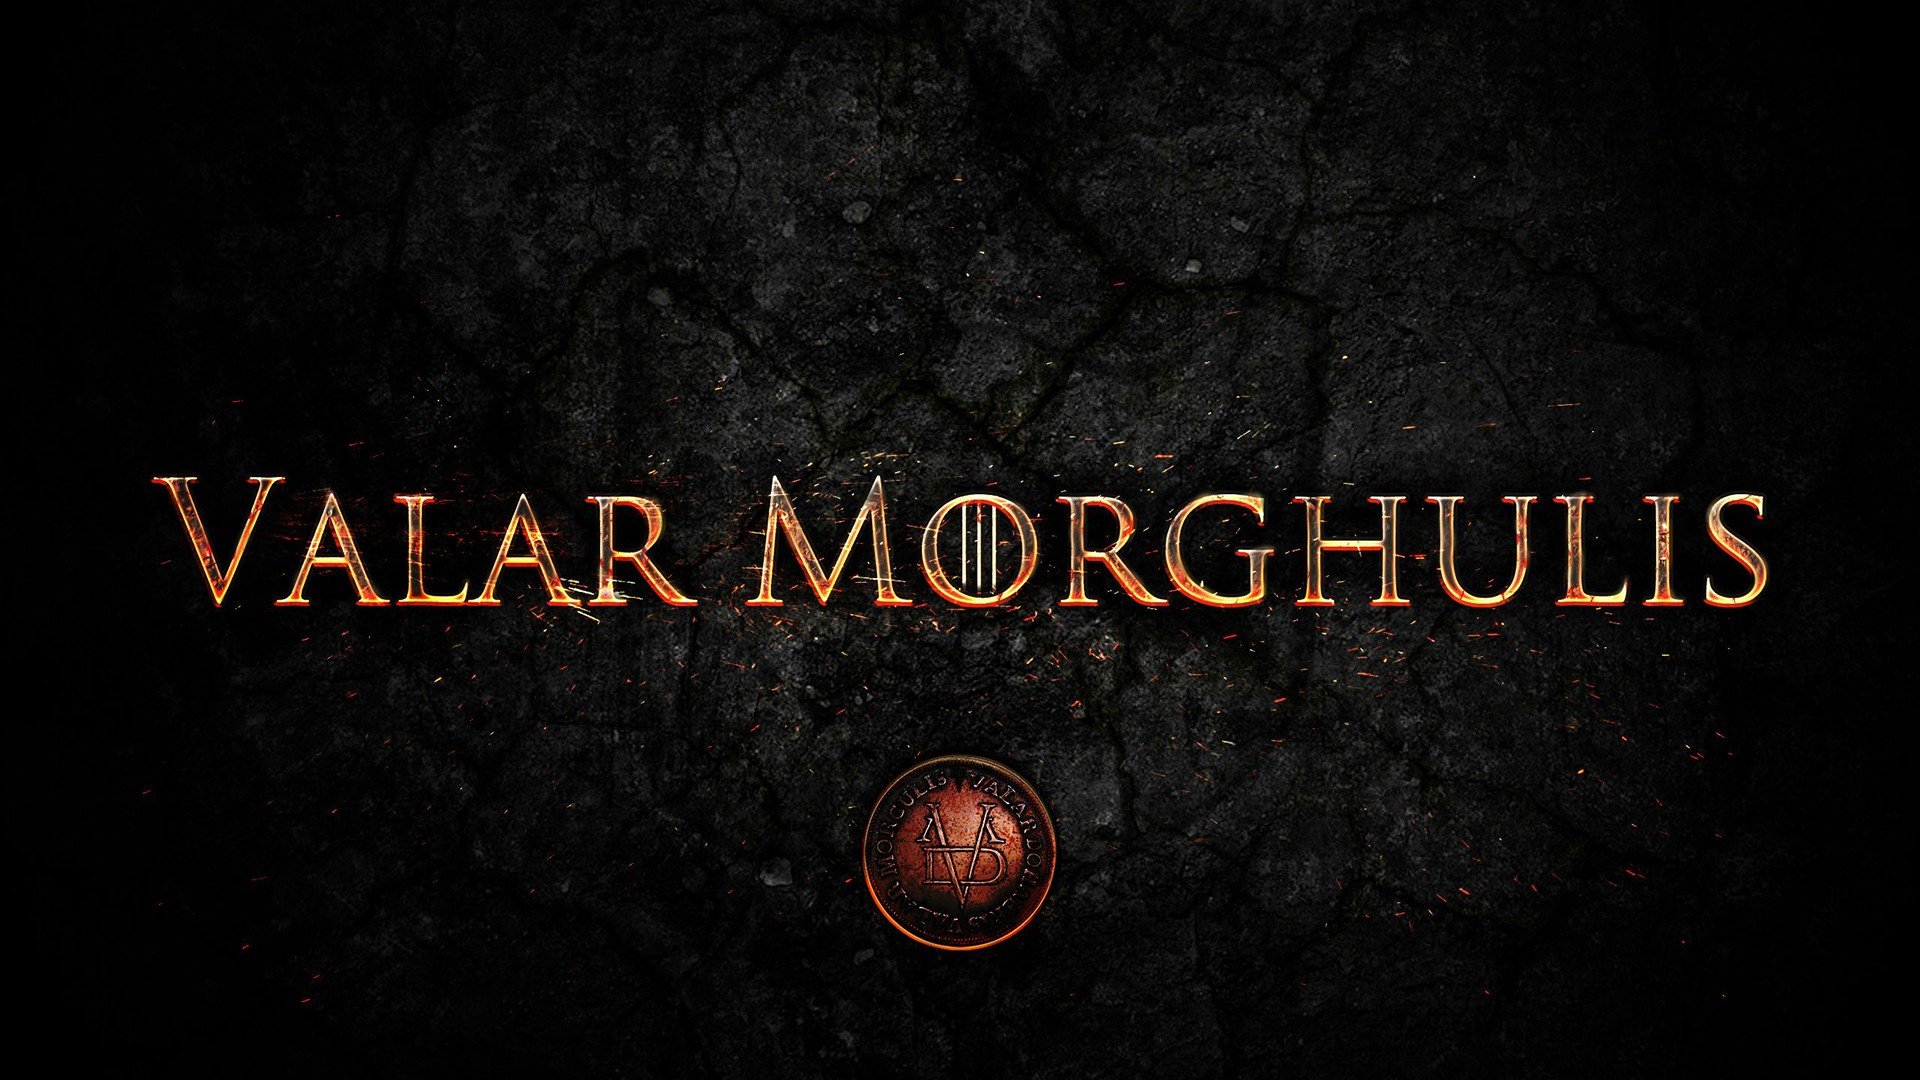 Game Of Thrones Valar Morghulis Hd Wallpapers Desktop And